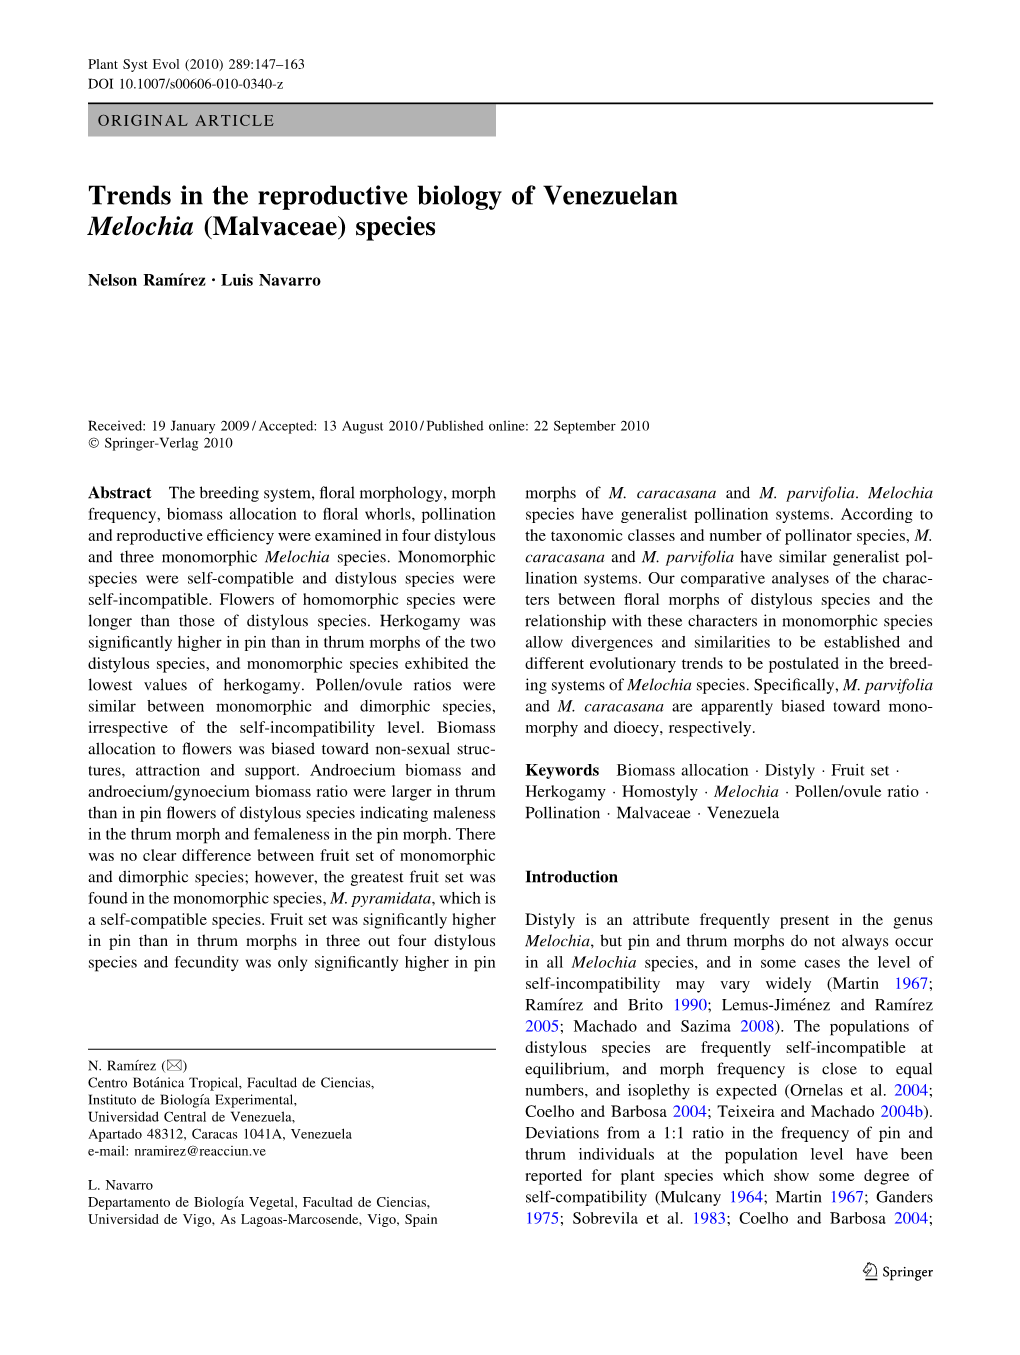 Trends in the Reproductive Biology of Venezuelan Melochia (Malvaceae) Species